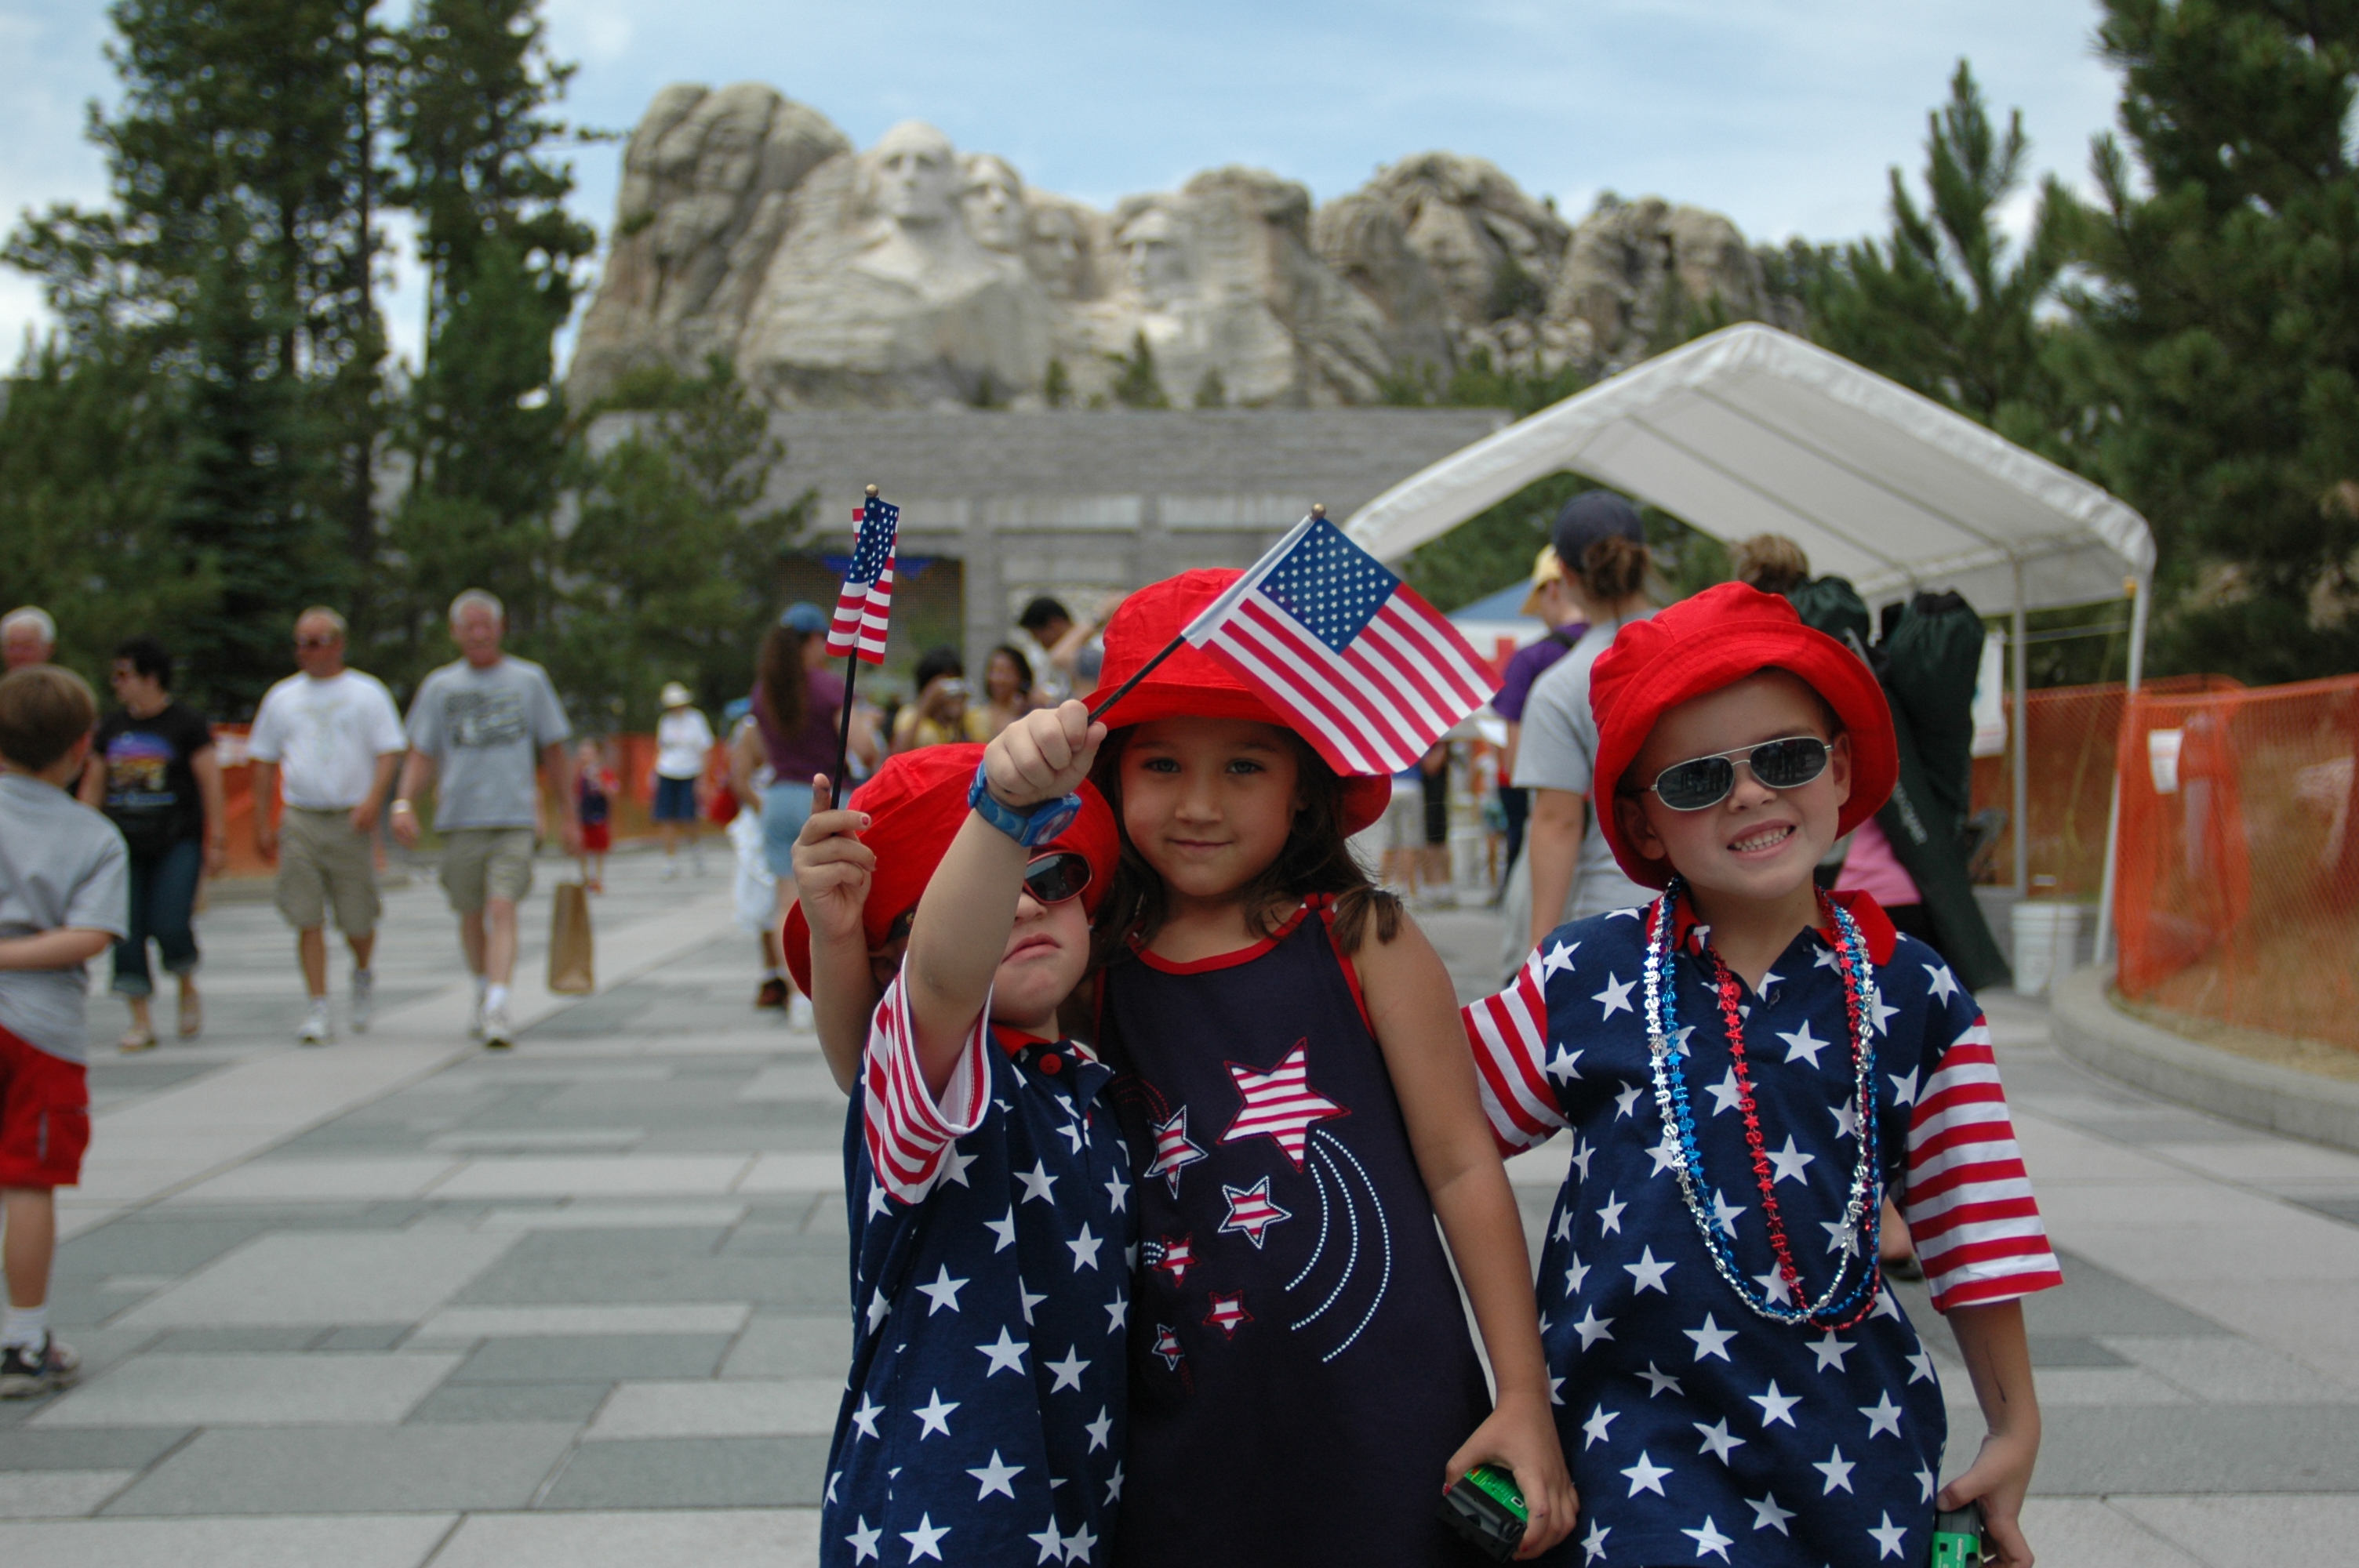 Patriotic children at Mount Rushmore waving flags